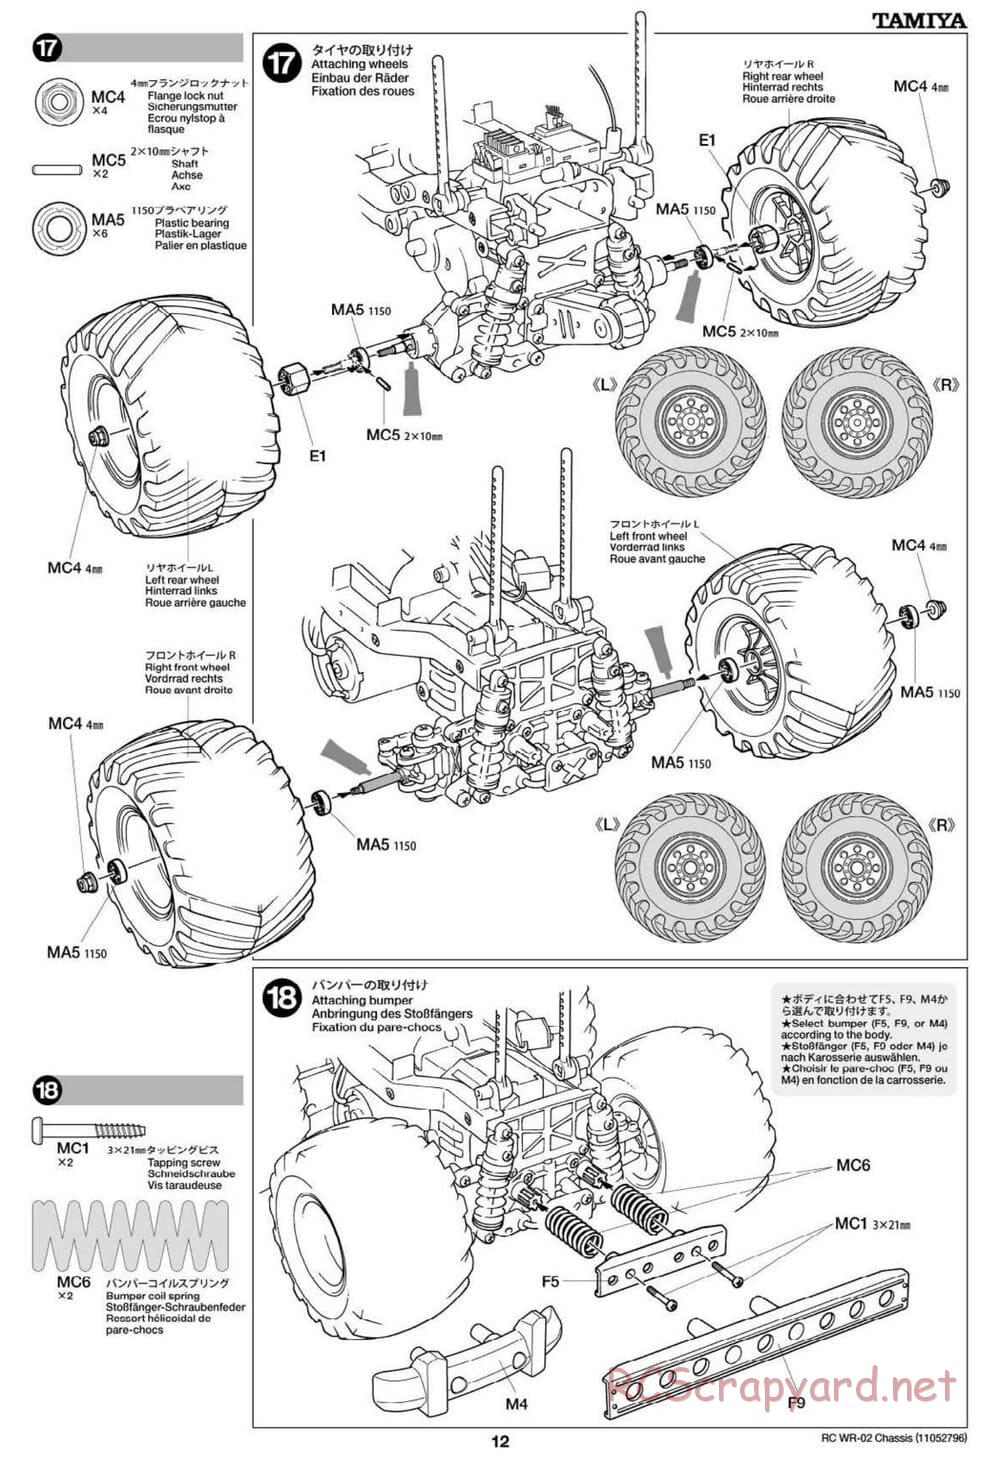 Tamiya - WR-02 Chassis - Manual - Page 12